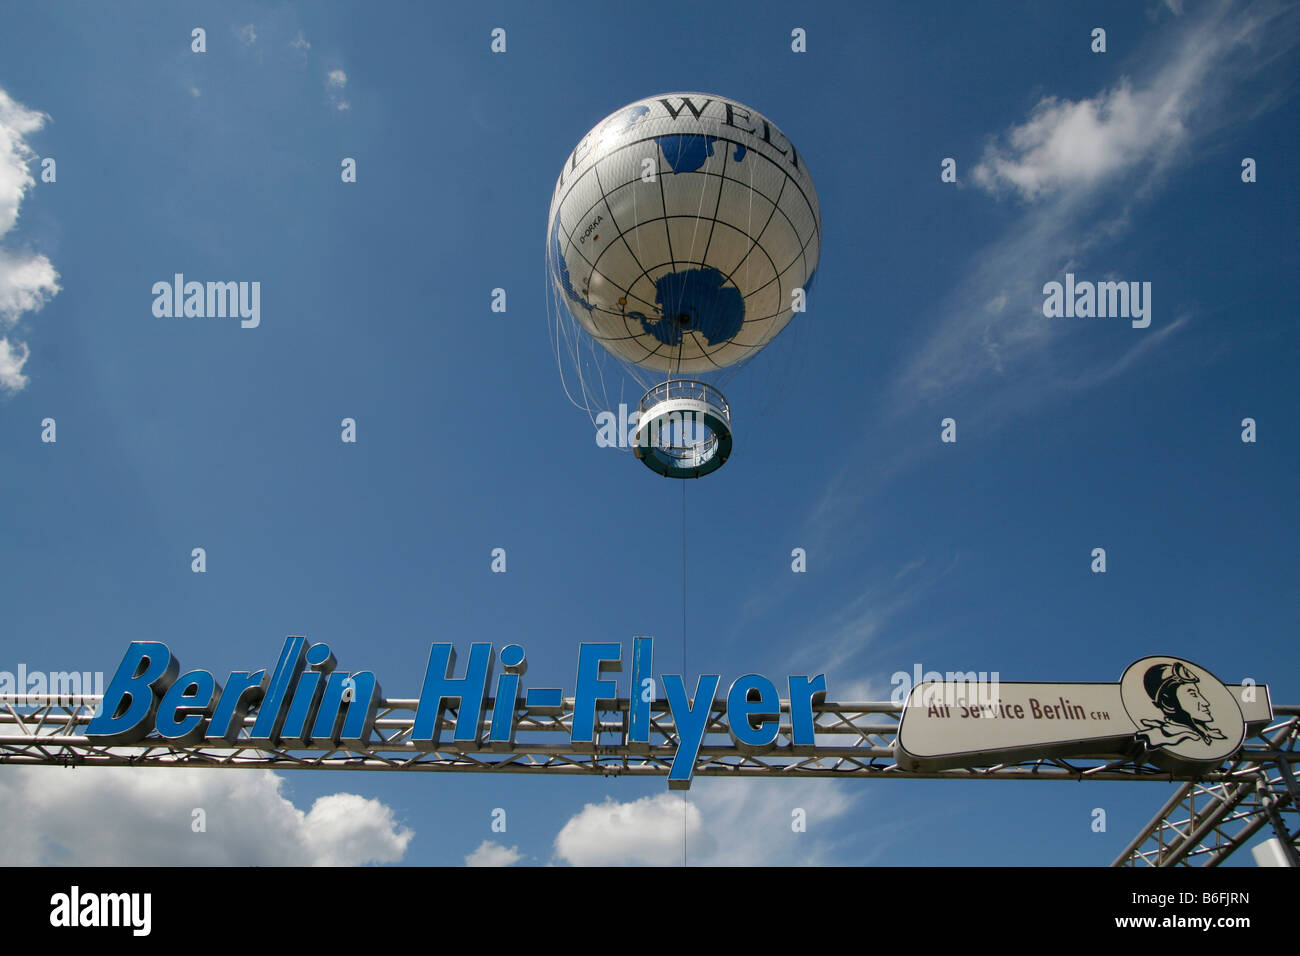 Signage, Berlin Hi-Flyer, balloon, Berlin, Germany, Europe Stock Photo